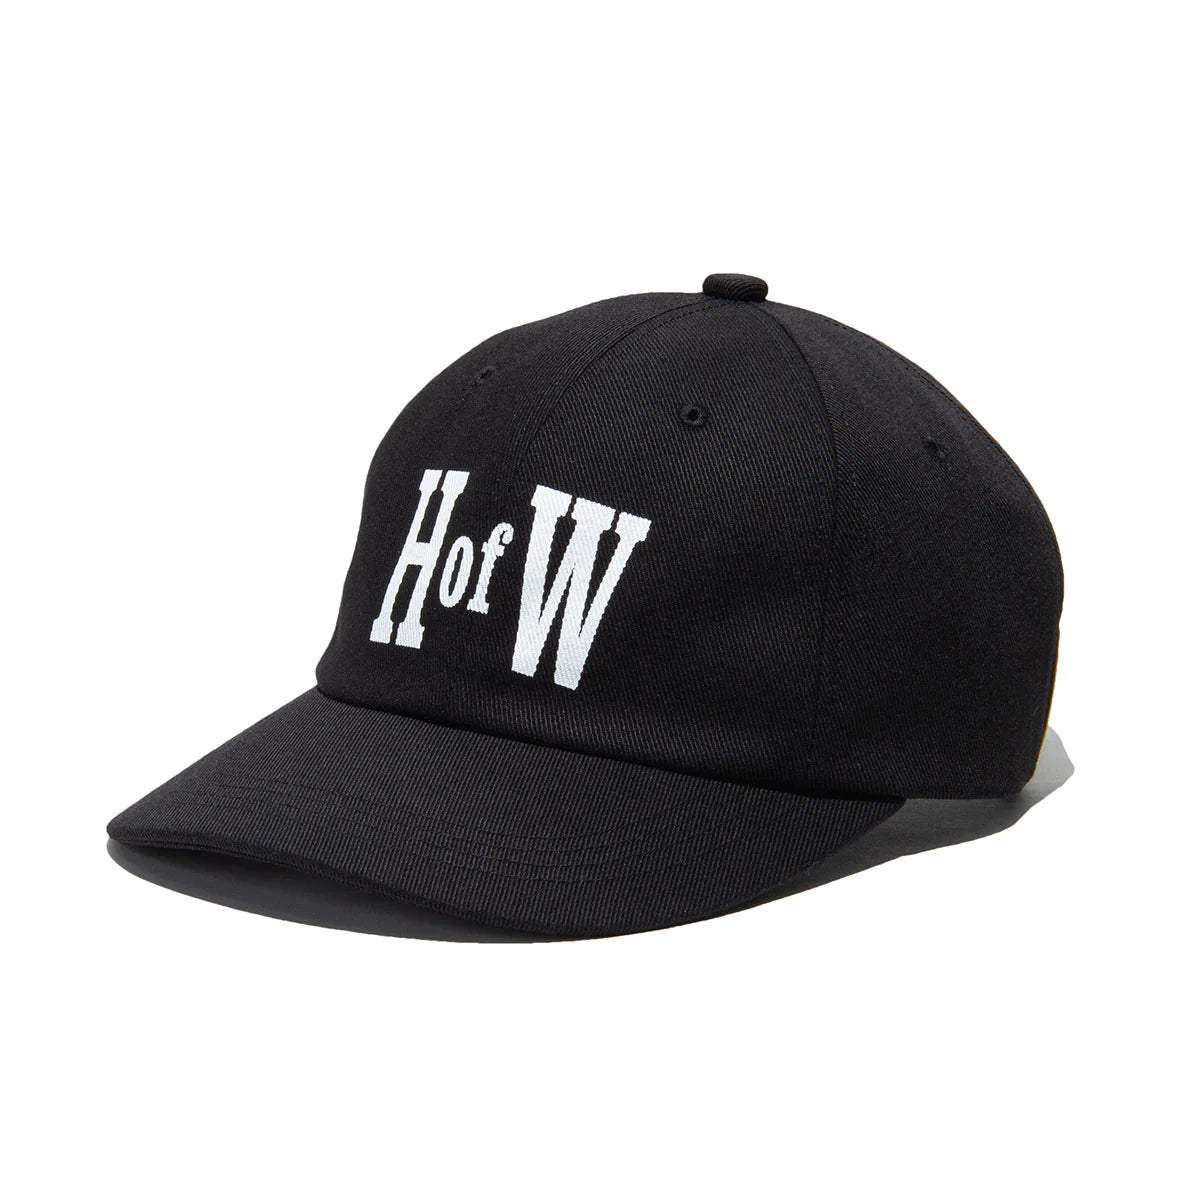 The H.W. Dog & Co - HofW CAP - Black